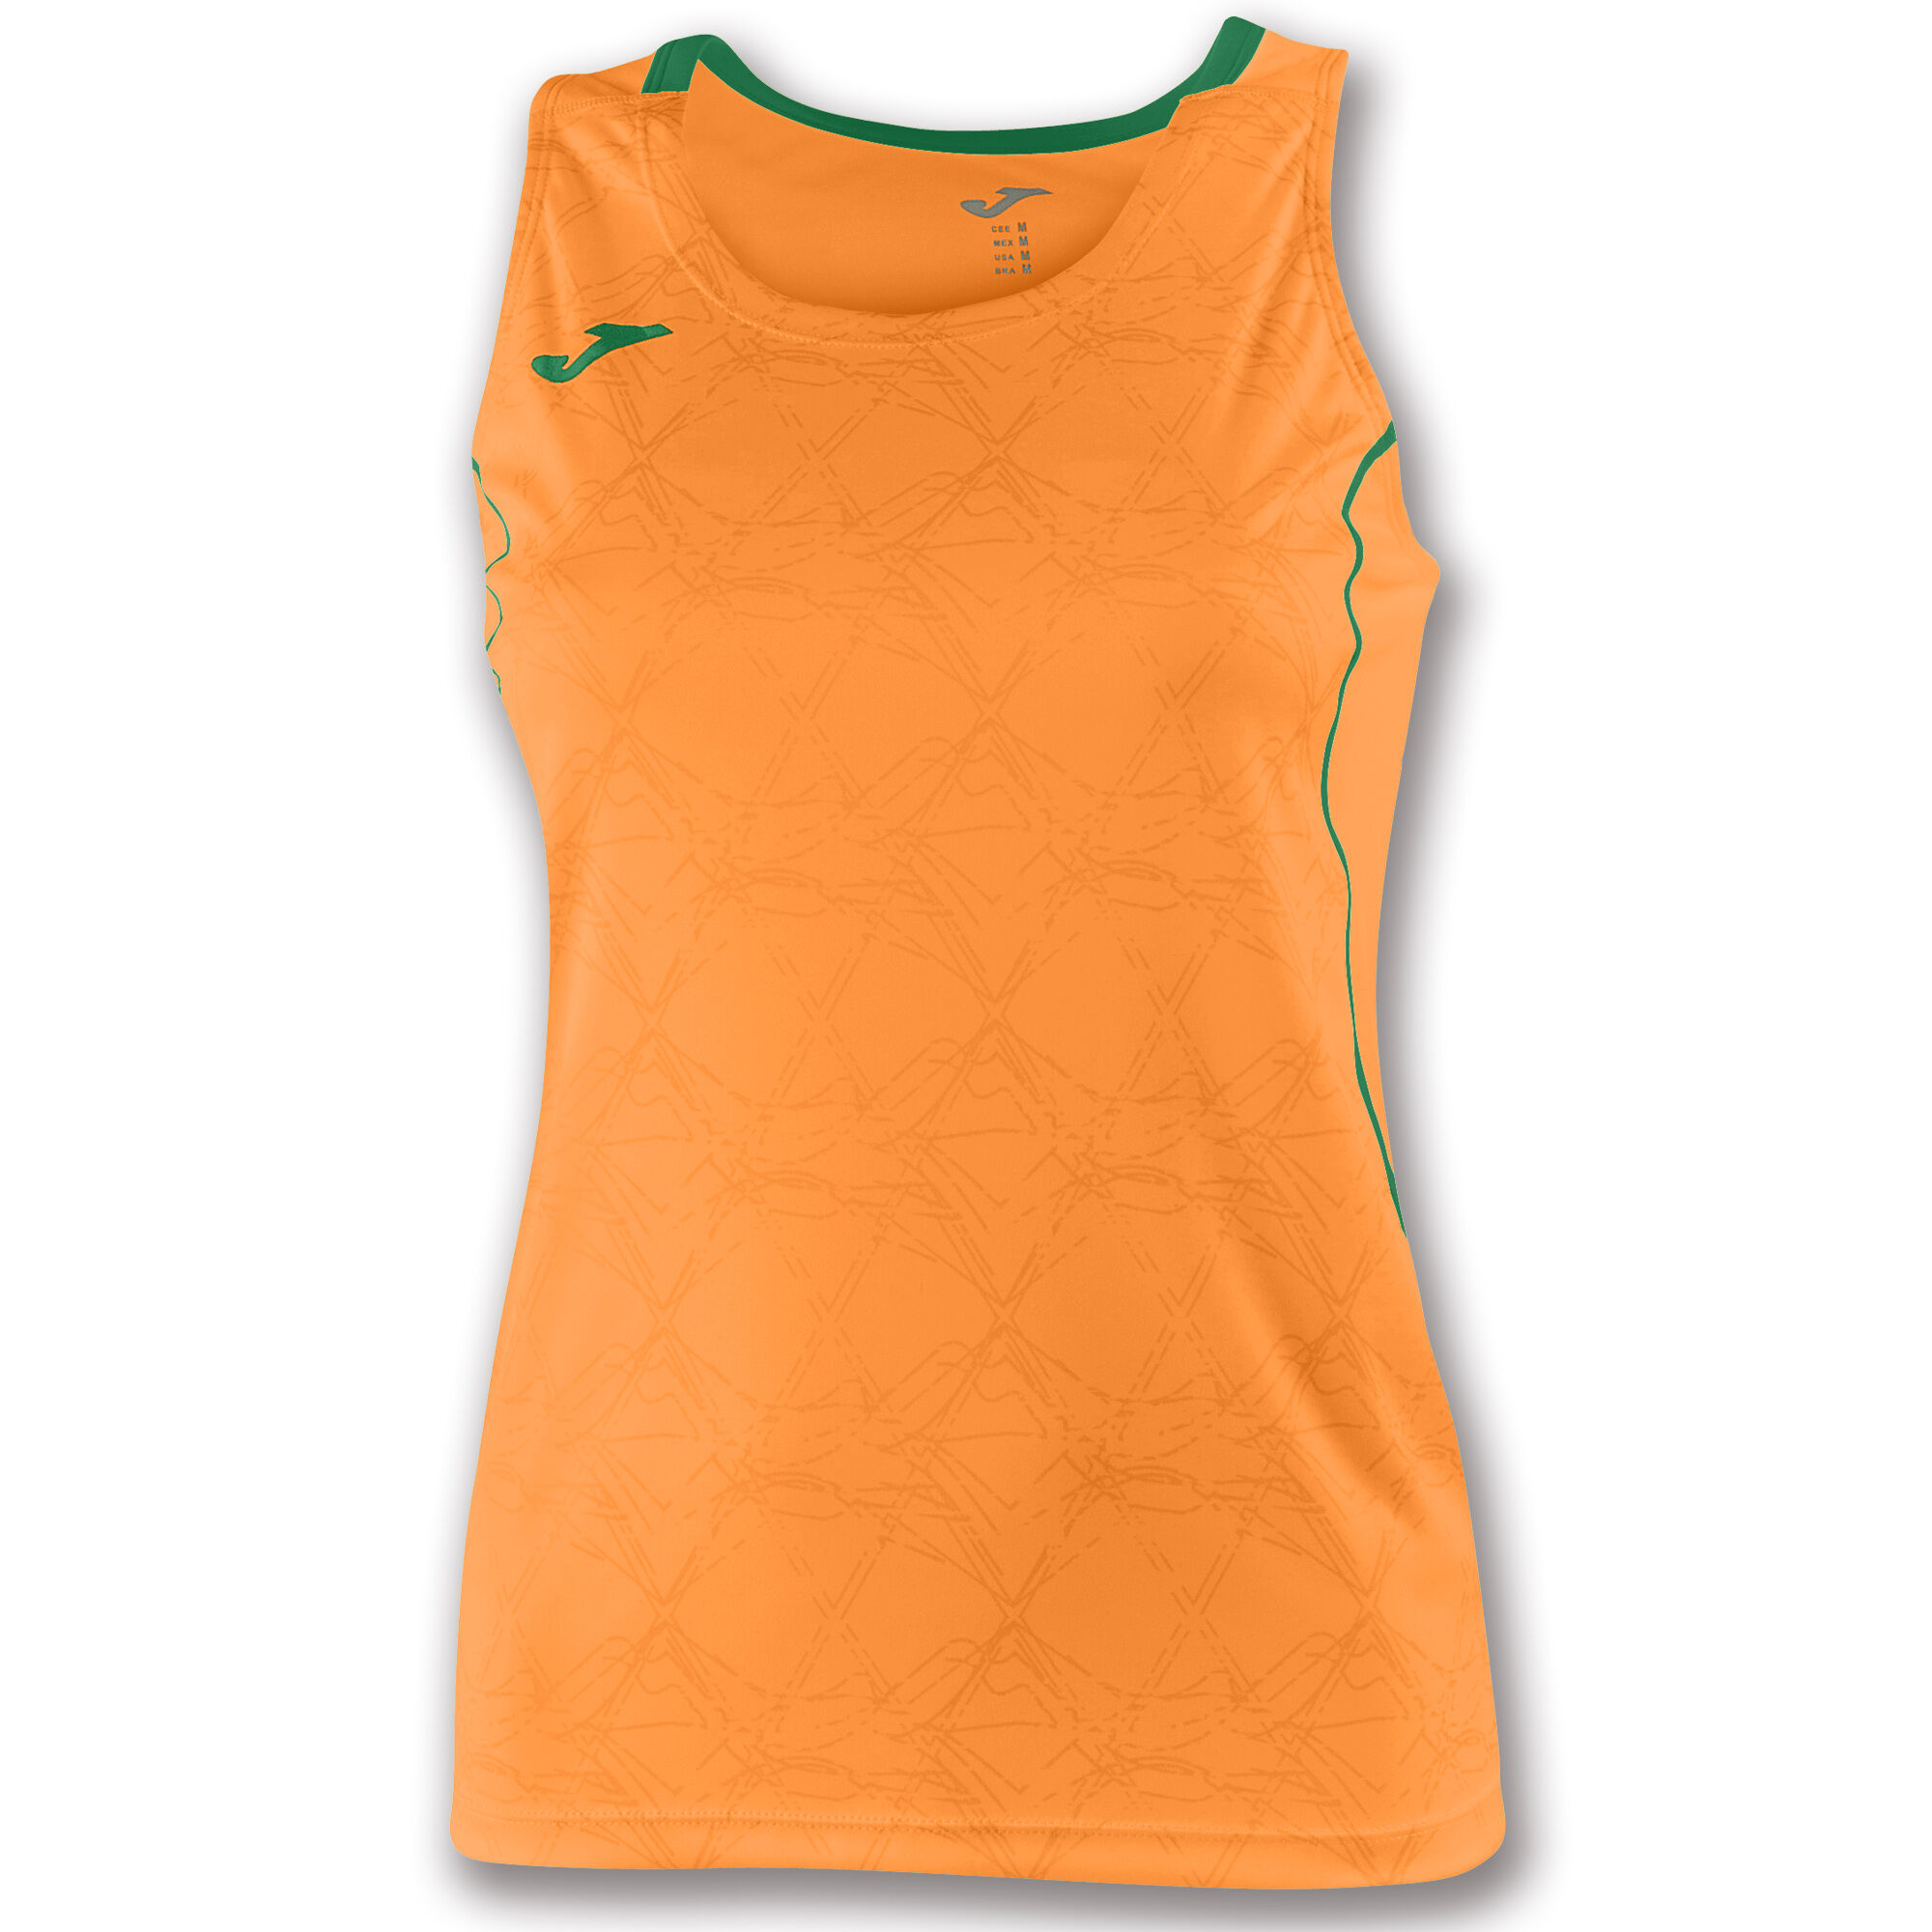 Camiseta sin mangas mujer Olimpia naranja flúor